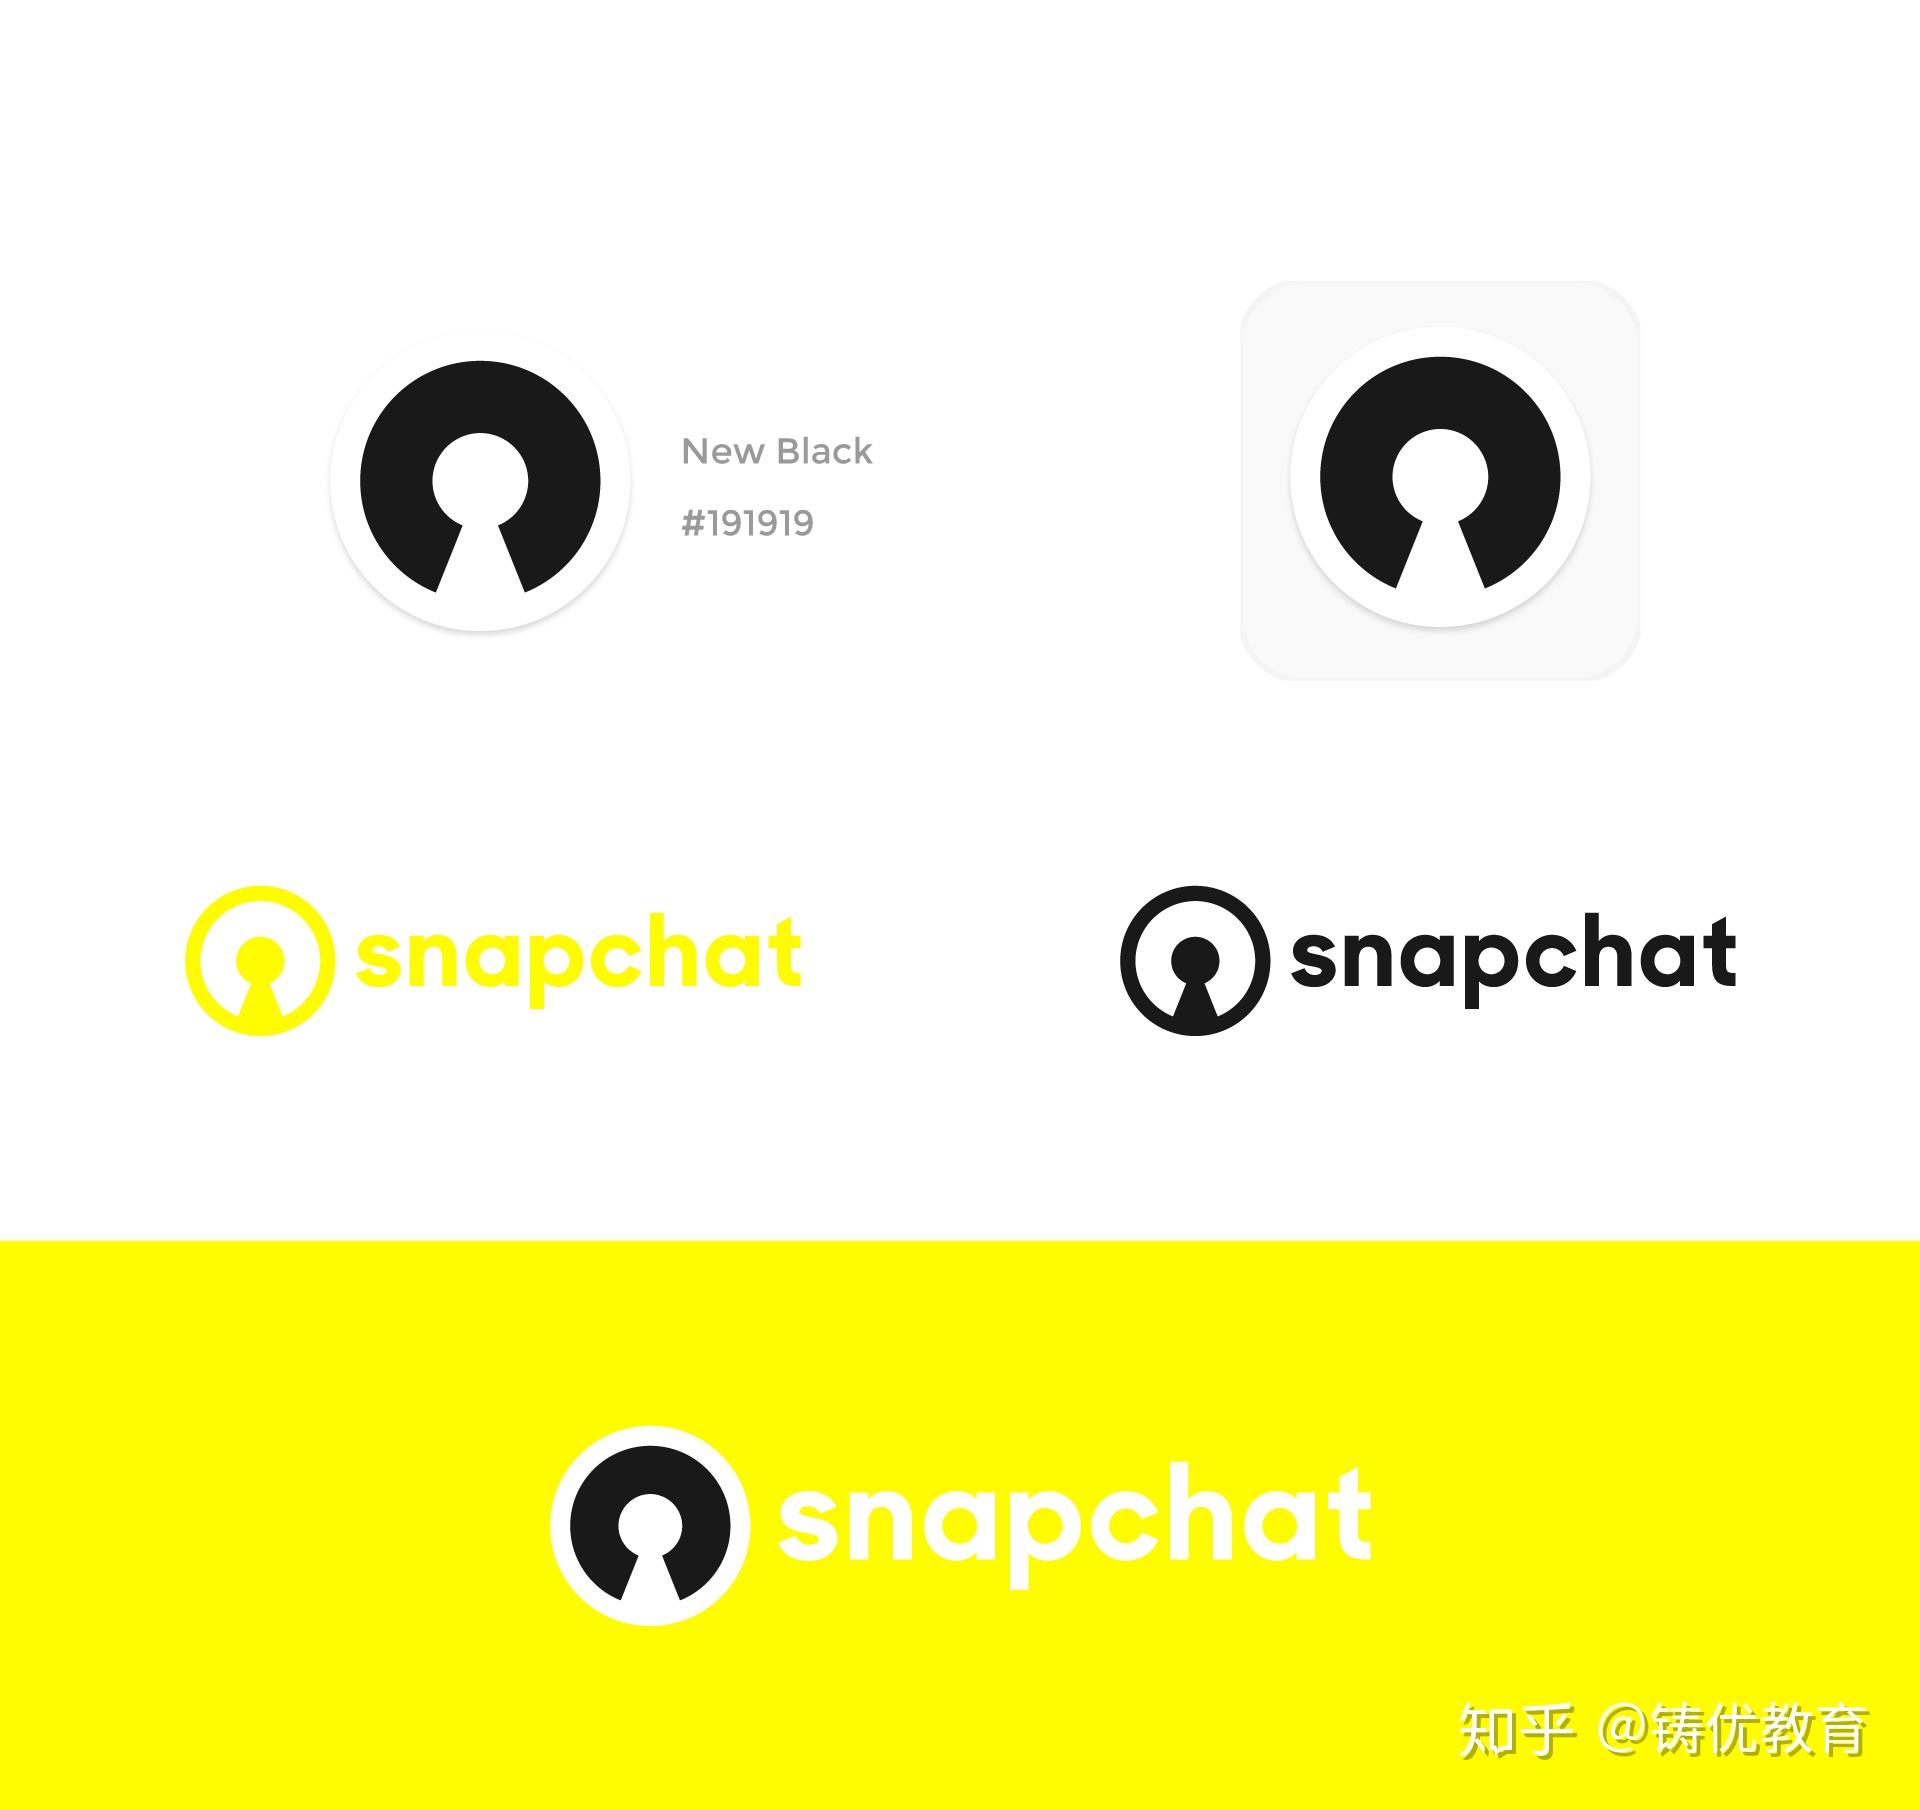 snapchat新版设计风格尝试